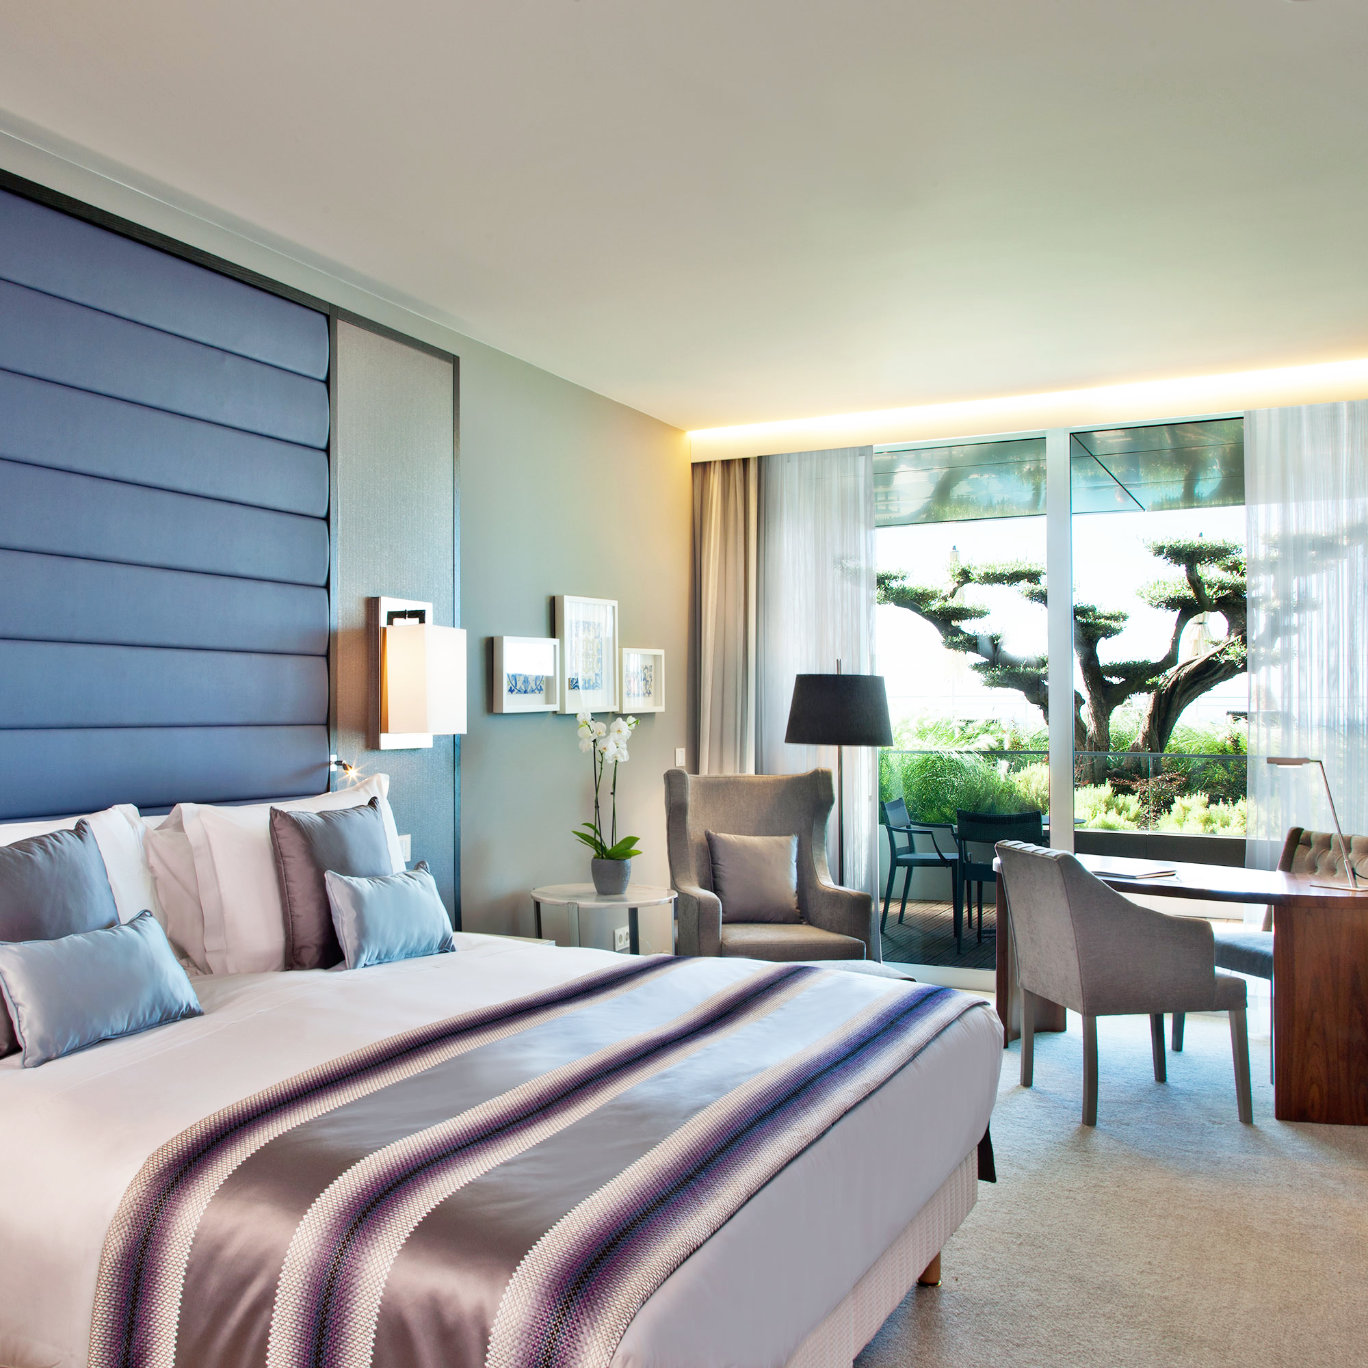 Standard-Rooms InterContinental Cascais-Estoril 5 star Hotel Mobile